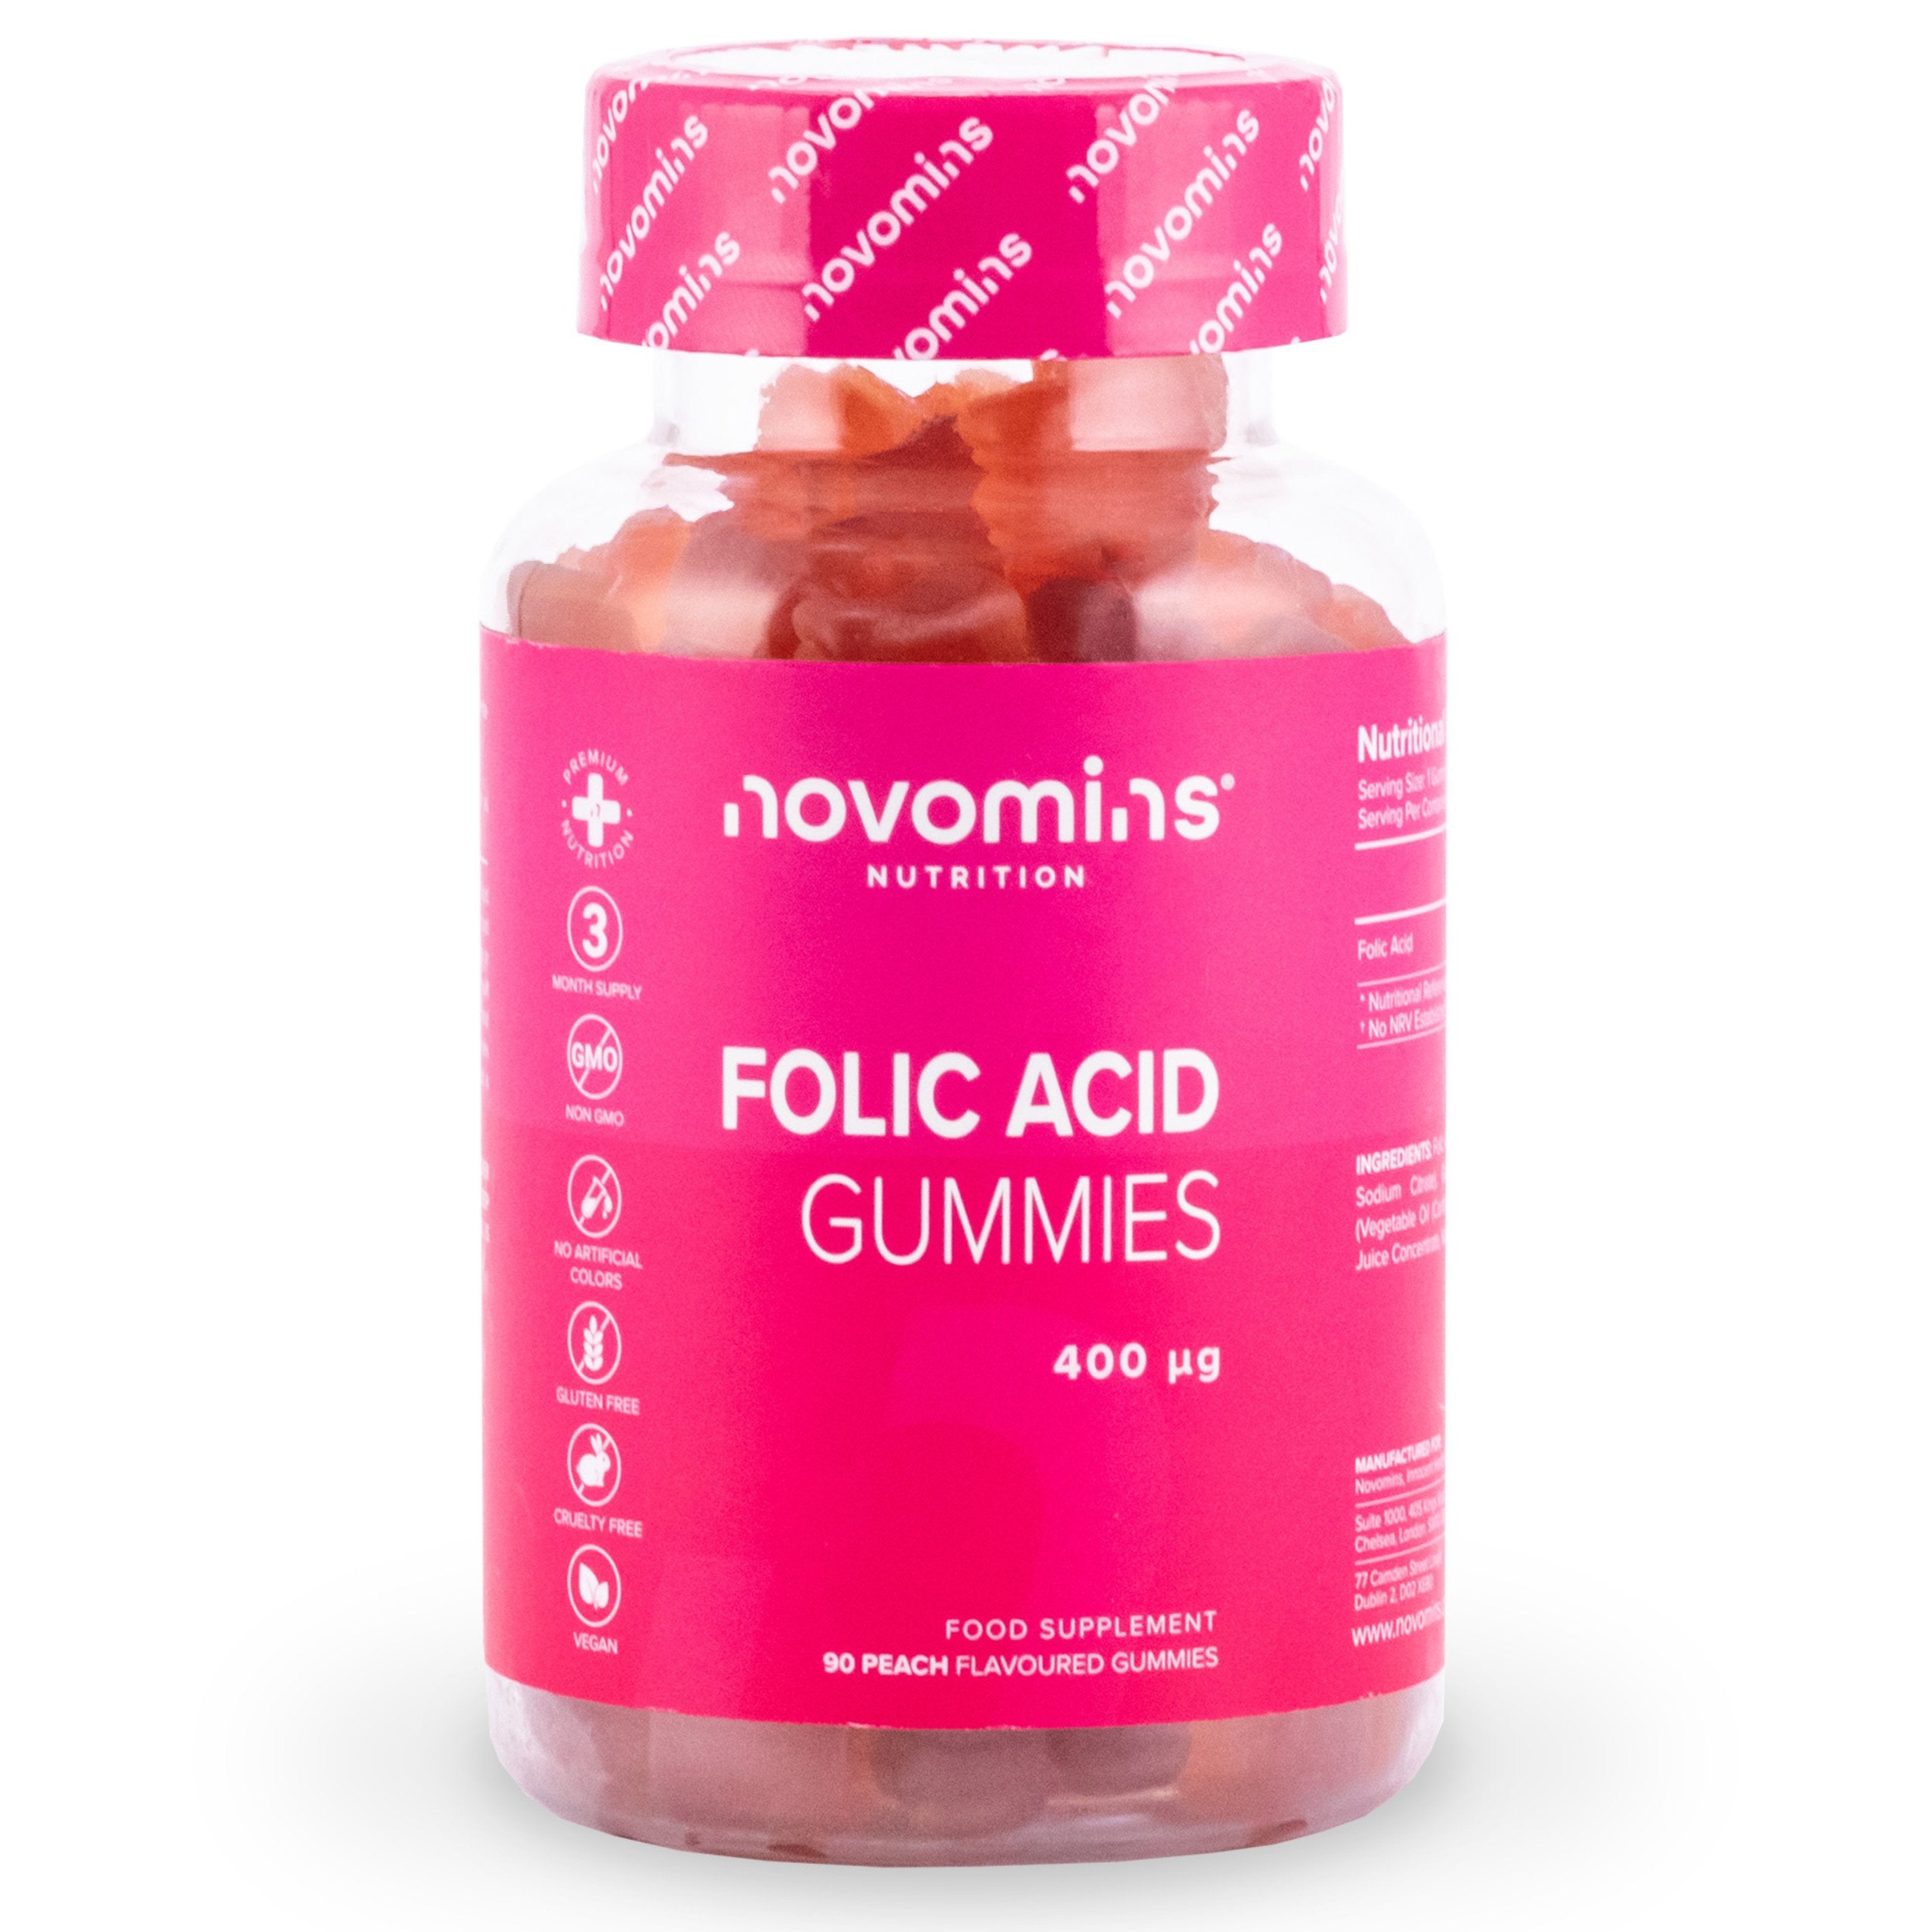 Novomins Folic Acid Gummies